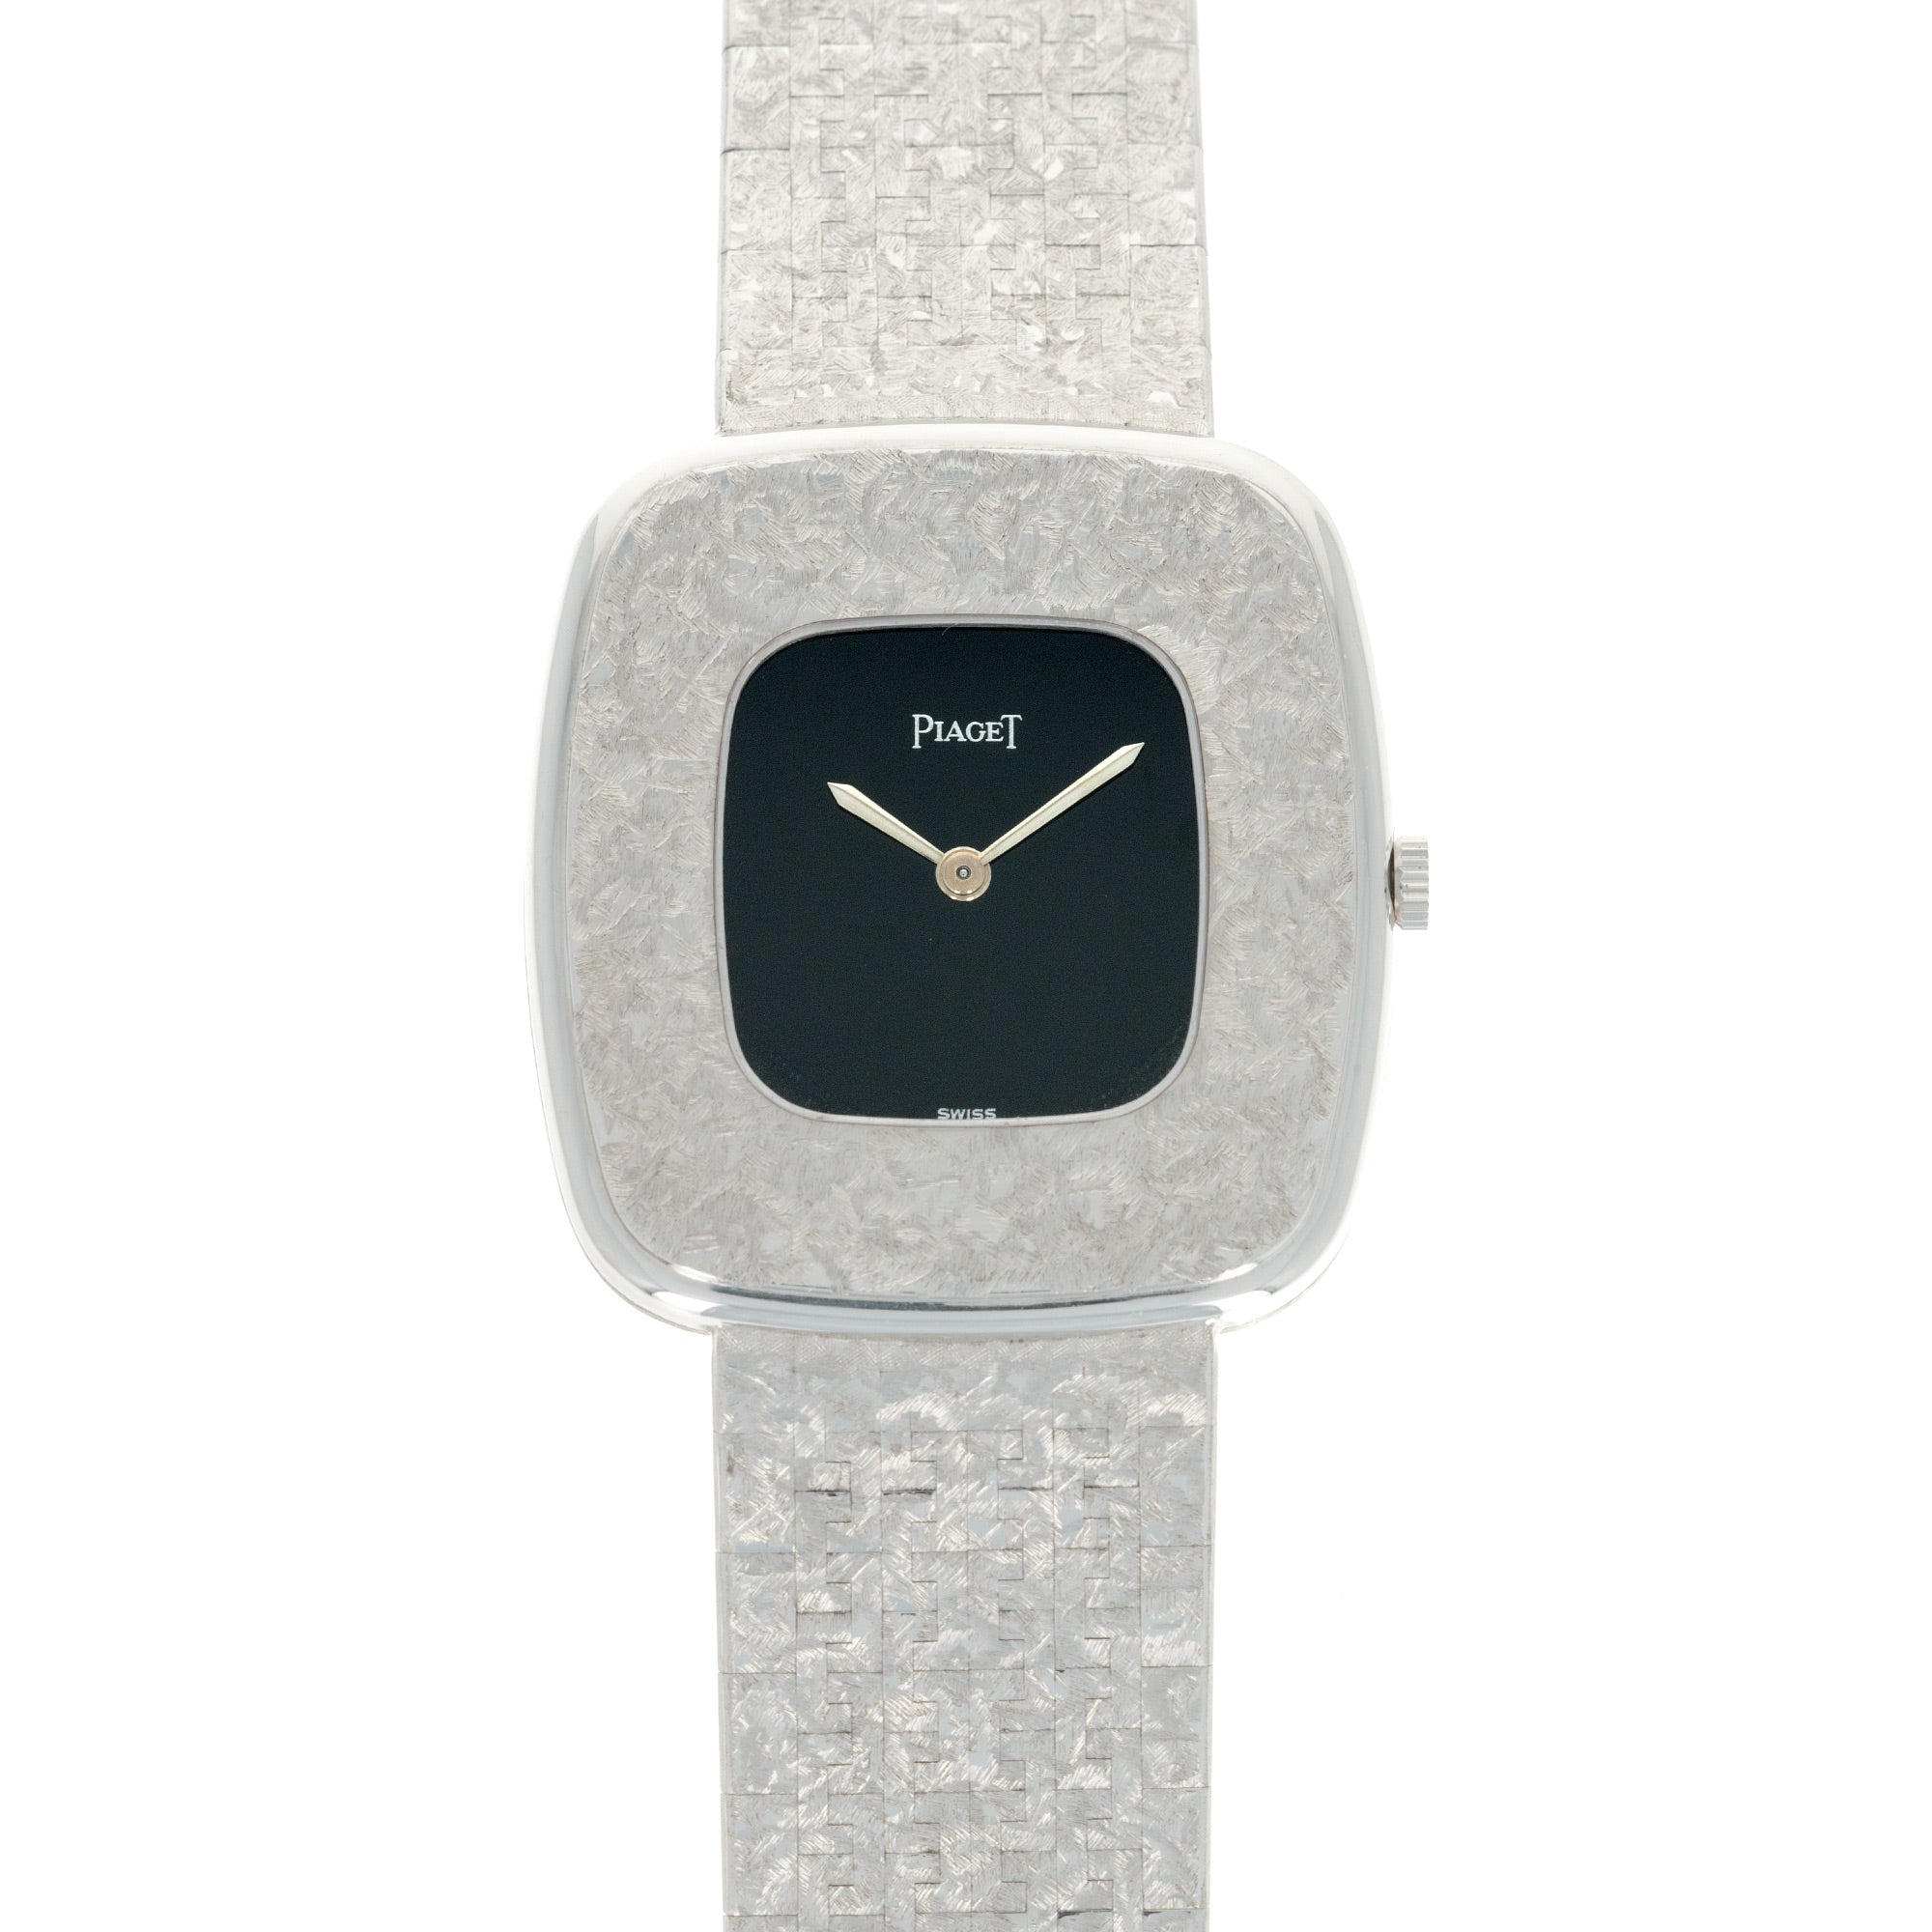 Piaget - Piaget White Gold Onyx Bracelet Watch - The Keystone Watches